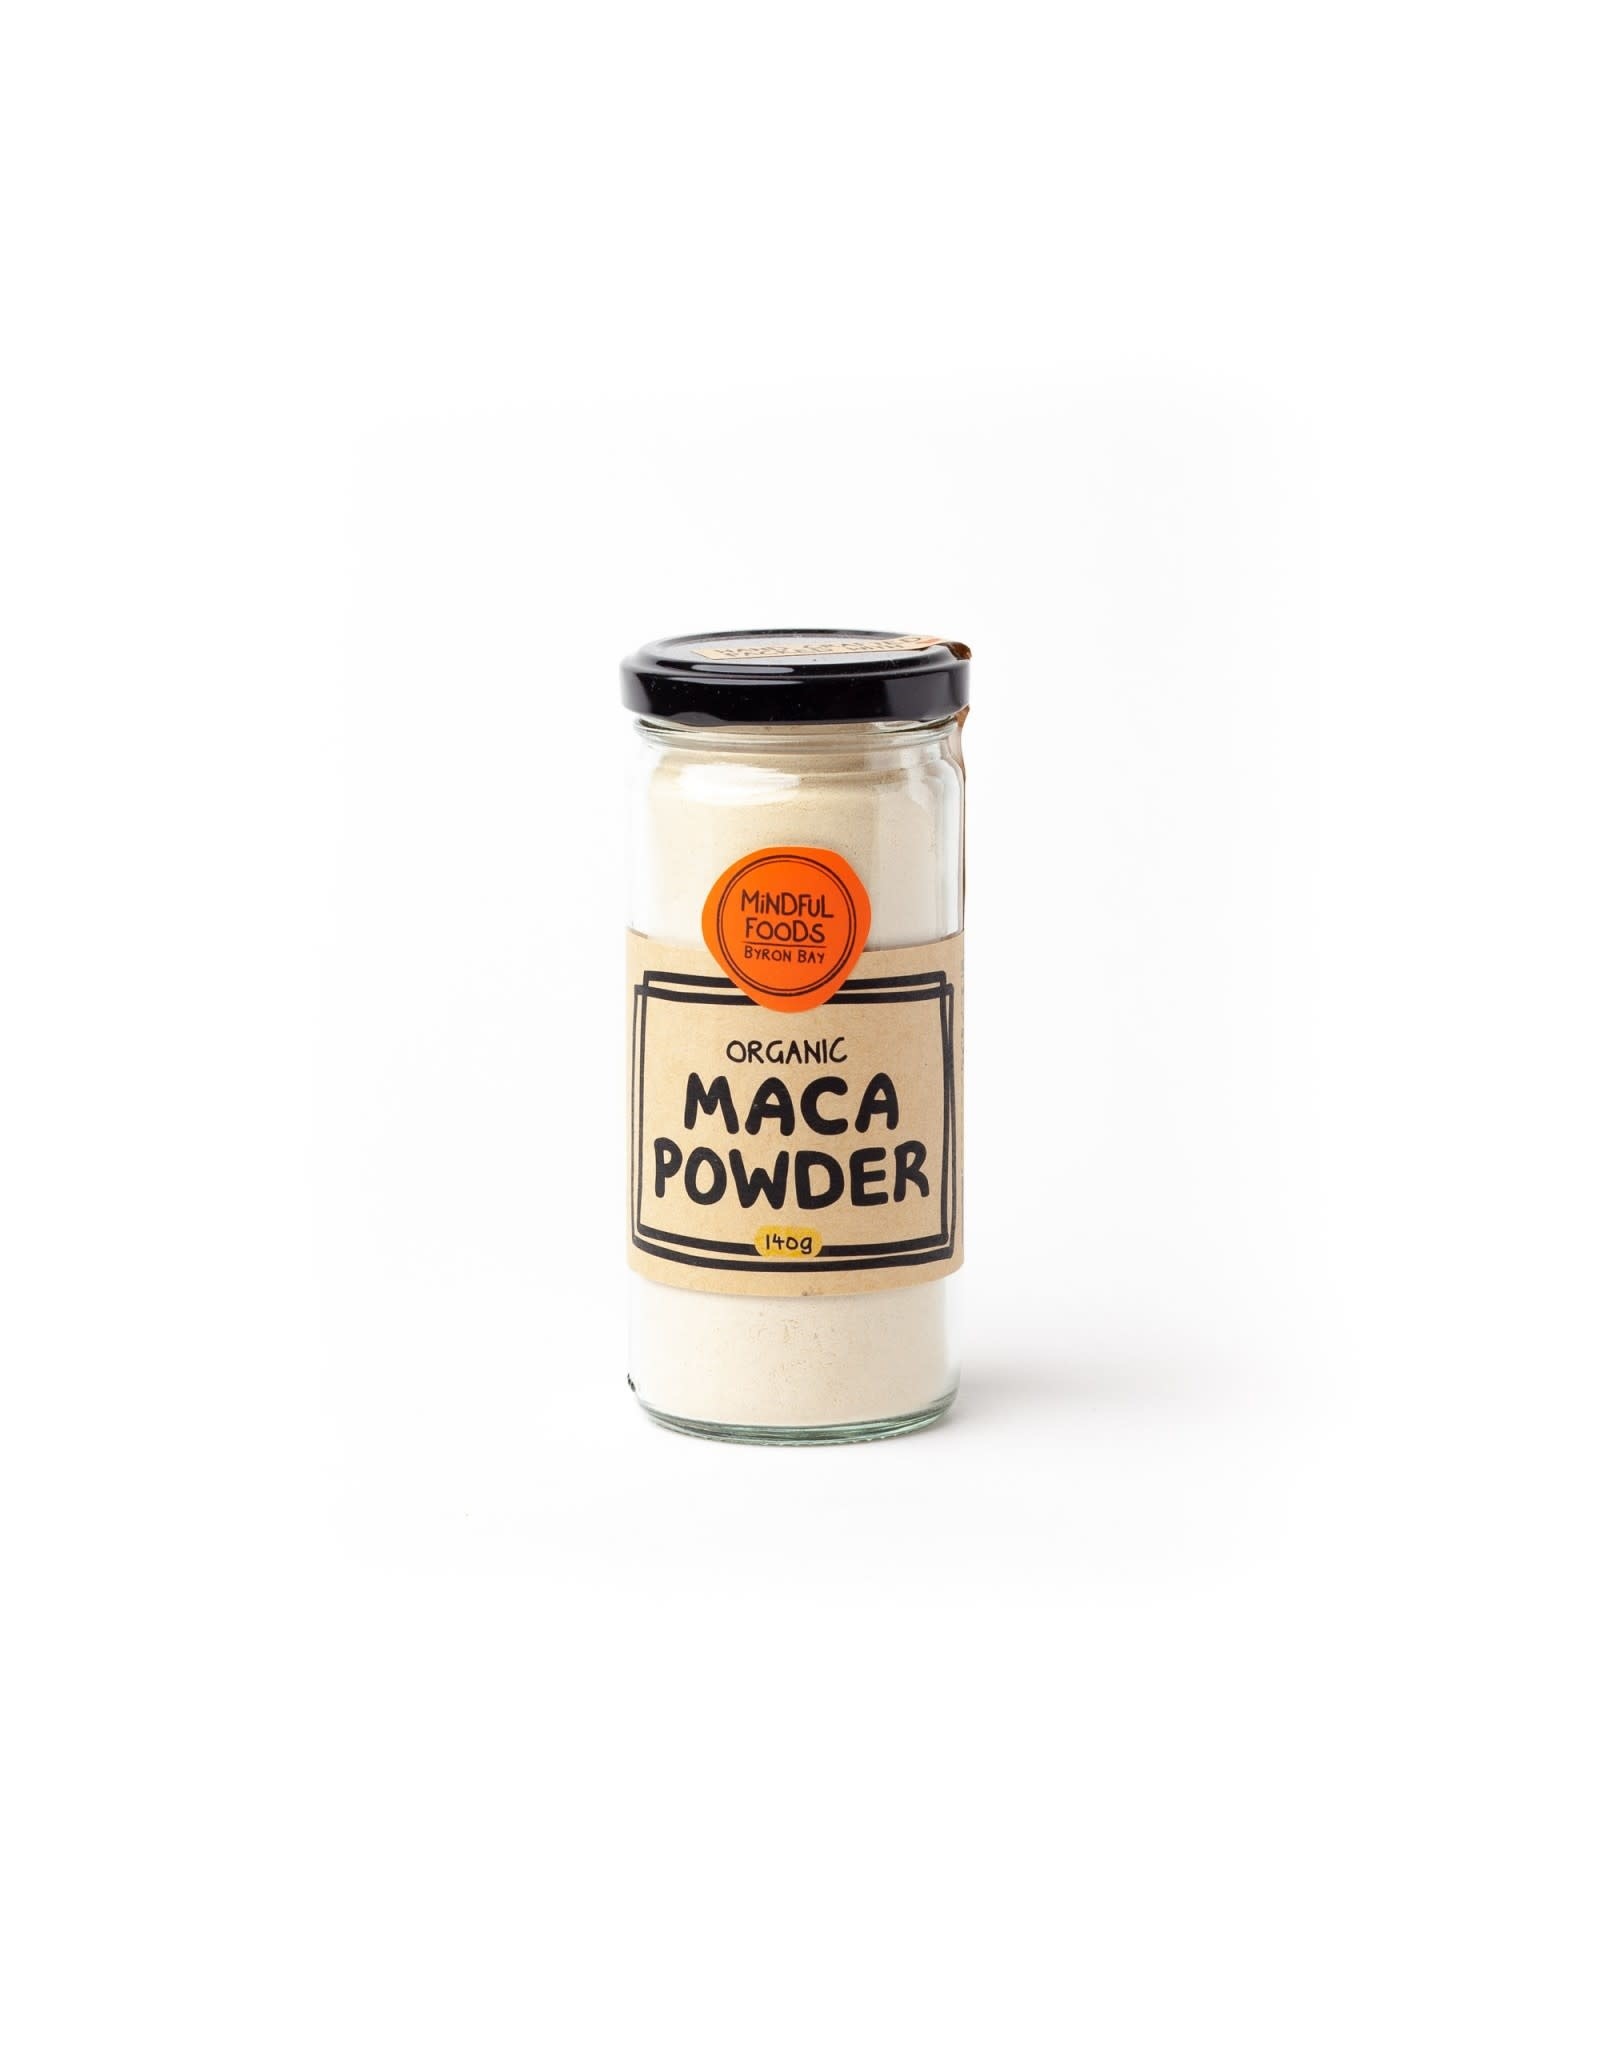 Mindful Foods Maca Powder - Organic